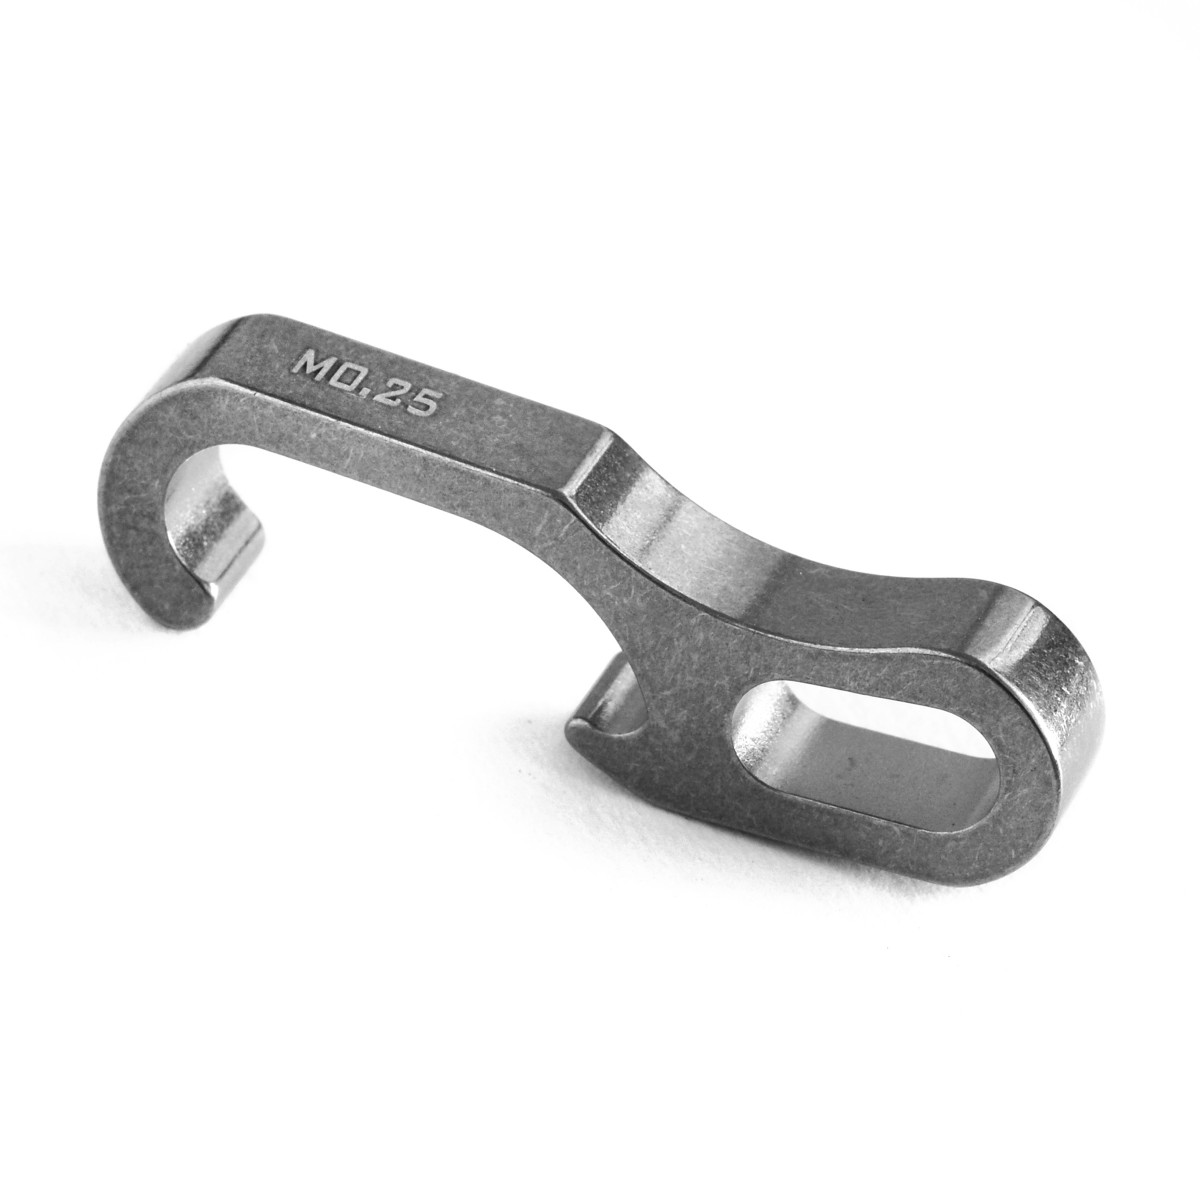 1 Pcs Titanium alloy mini bottle opener can opener stainless steel key clafa 